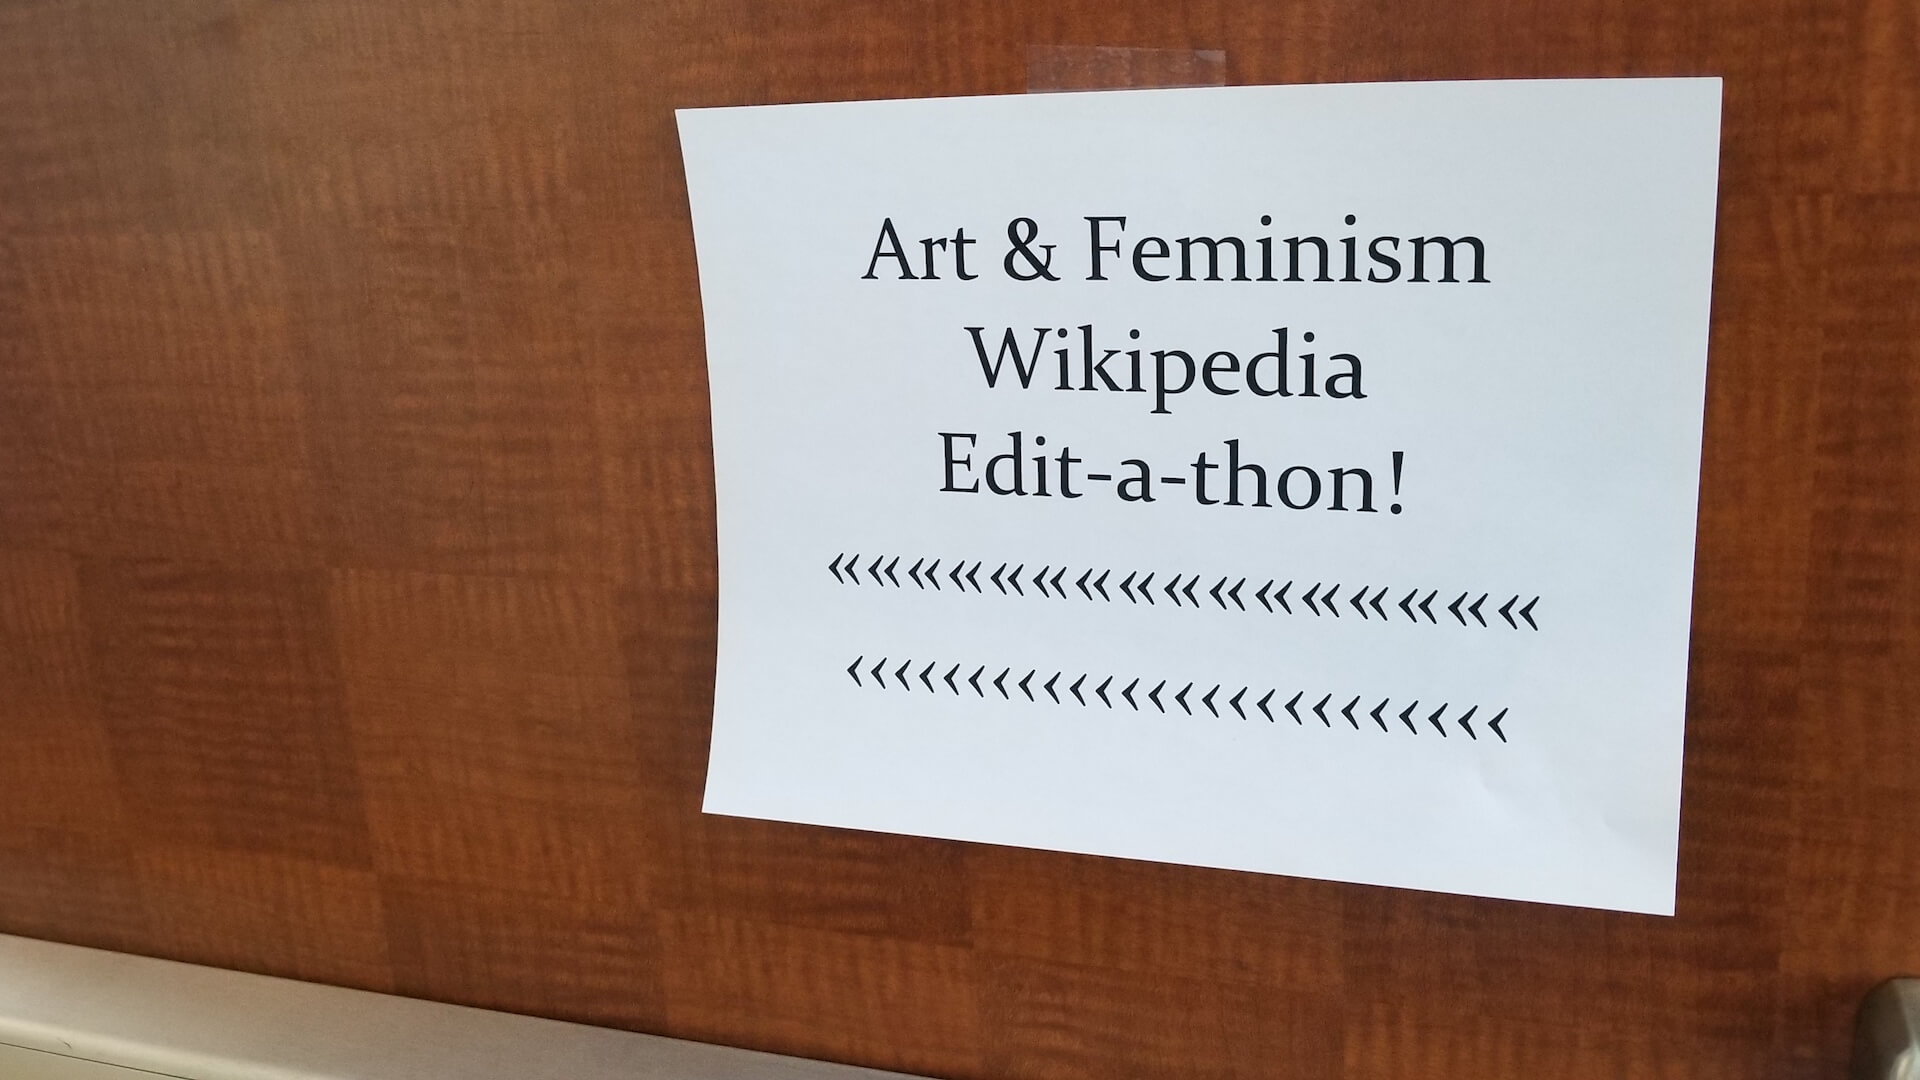 Art + Feminism Wikipedia Edit-a-thon - Surrey Art Gallery 2019 - Slide 2